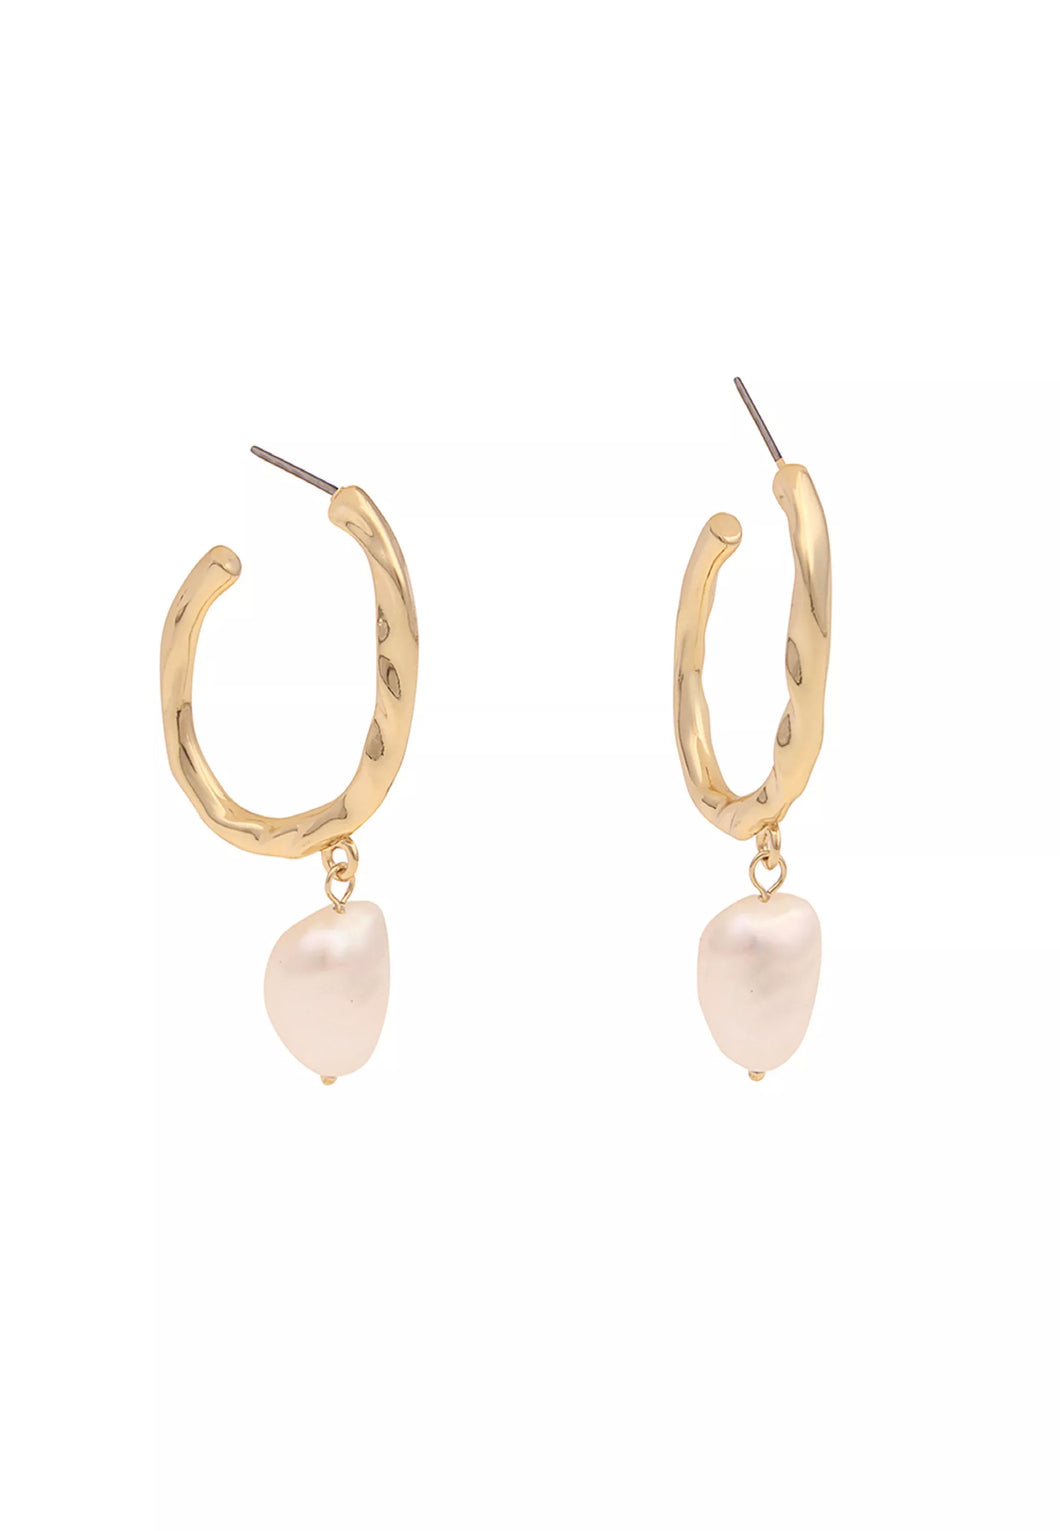 Leslii Damen-Ohrringe Creolen Perlen-Ohrschmuck goldene Modeschmuck-Ohrringe Gold Weiß